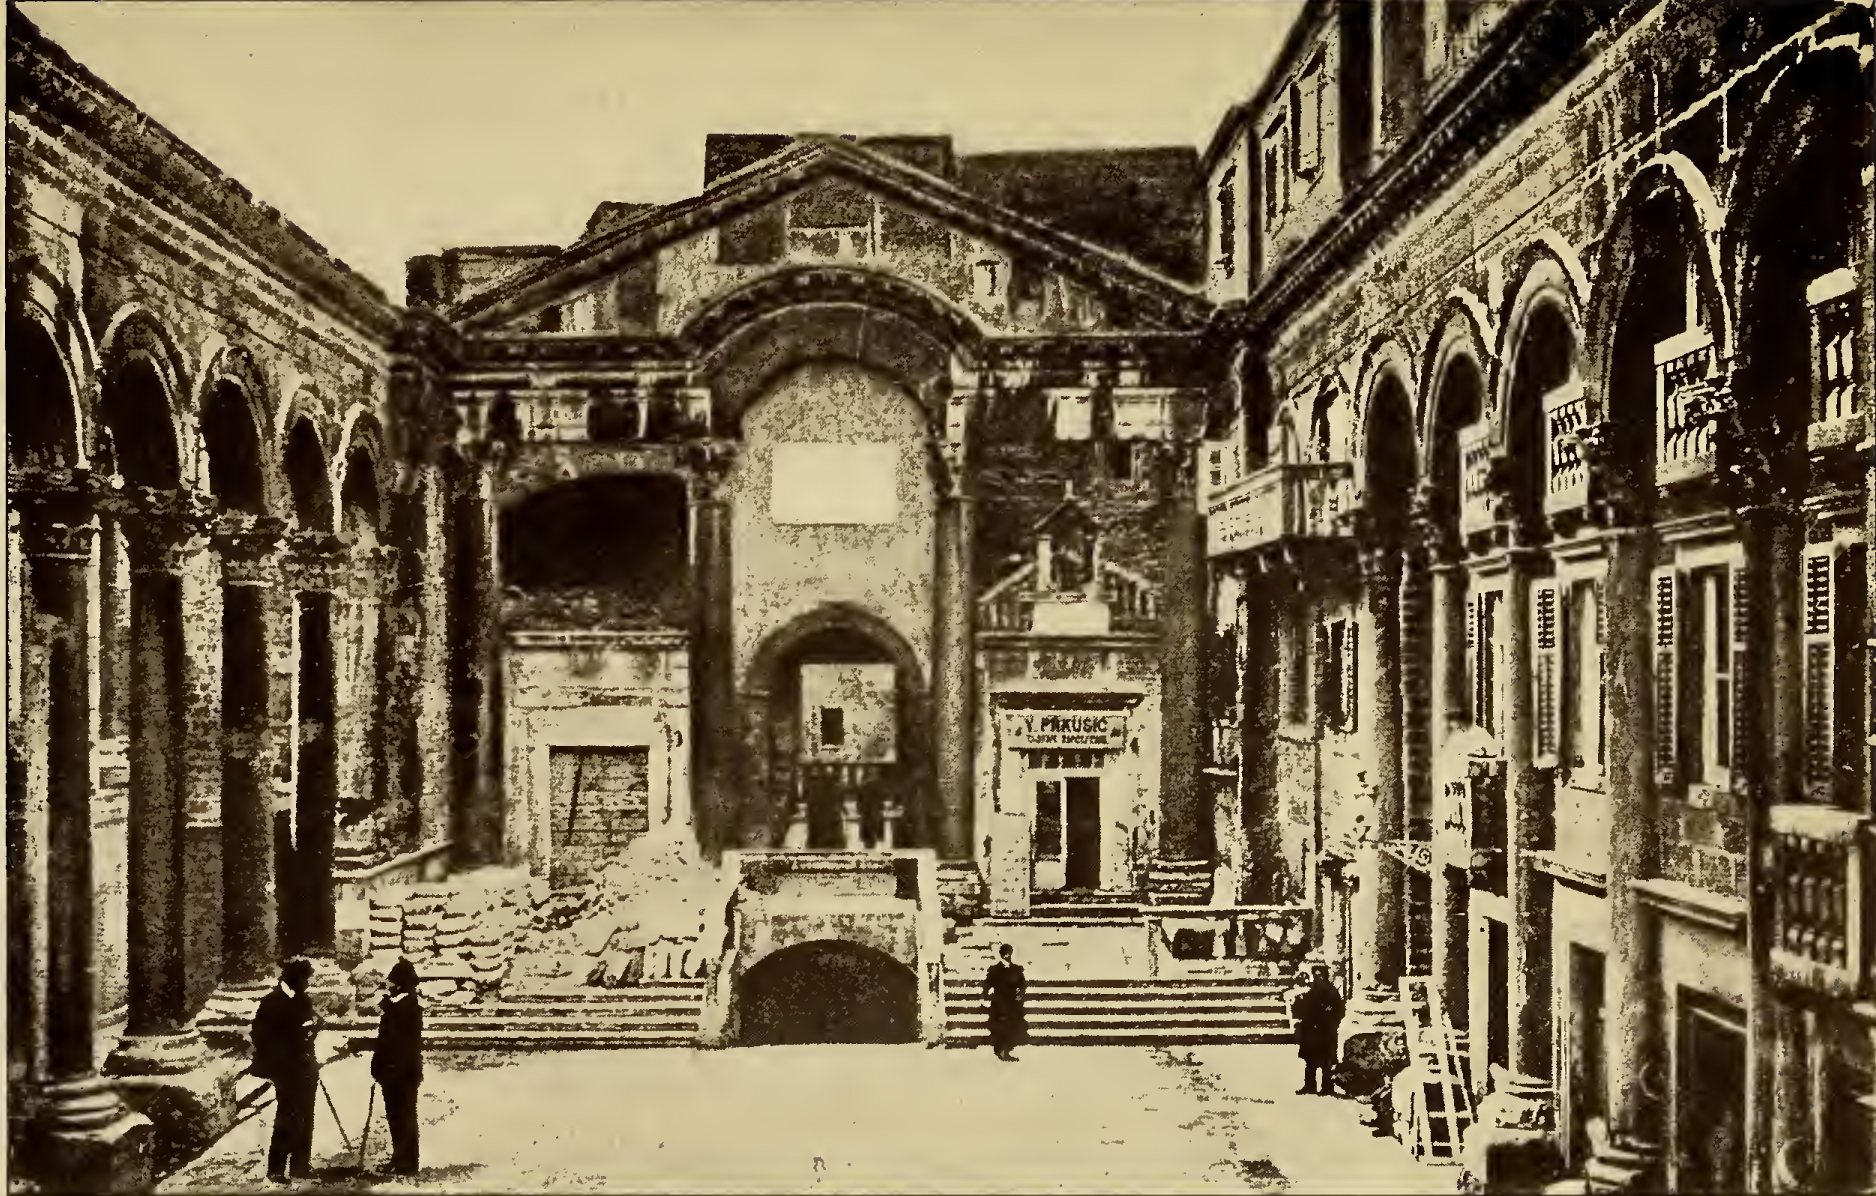 Columned courtyard before building entrance. Caption: Spalato Vestibule and Peristyle.